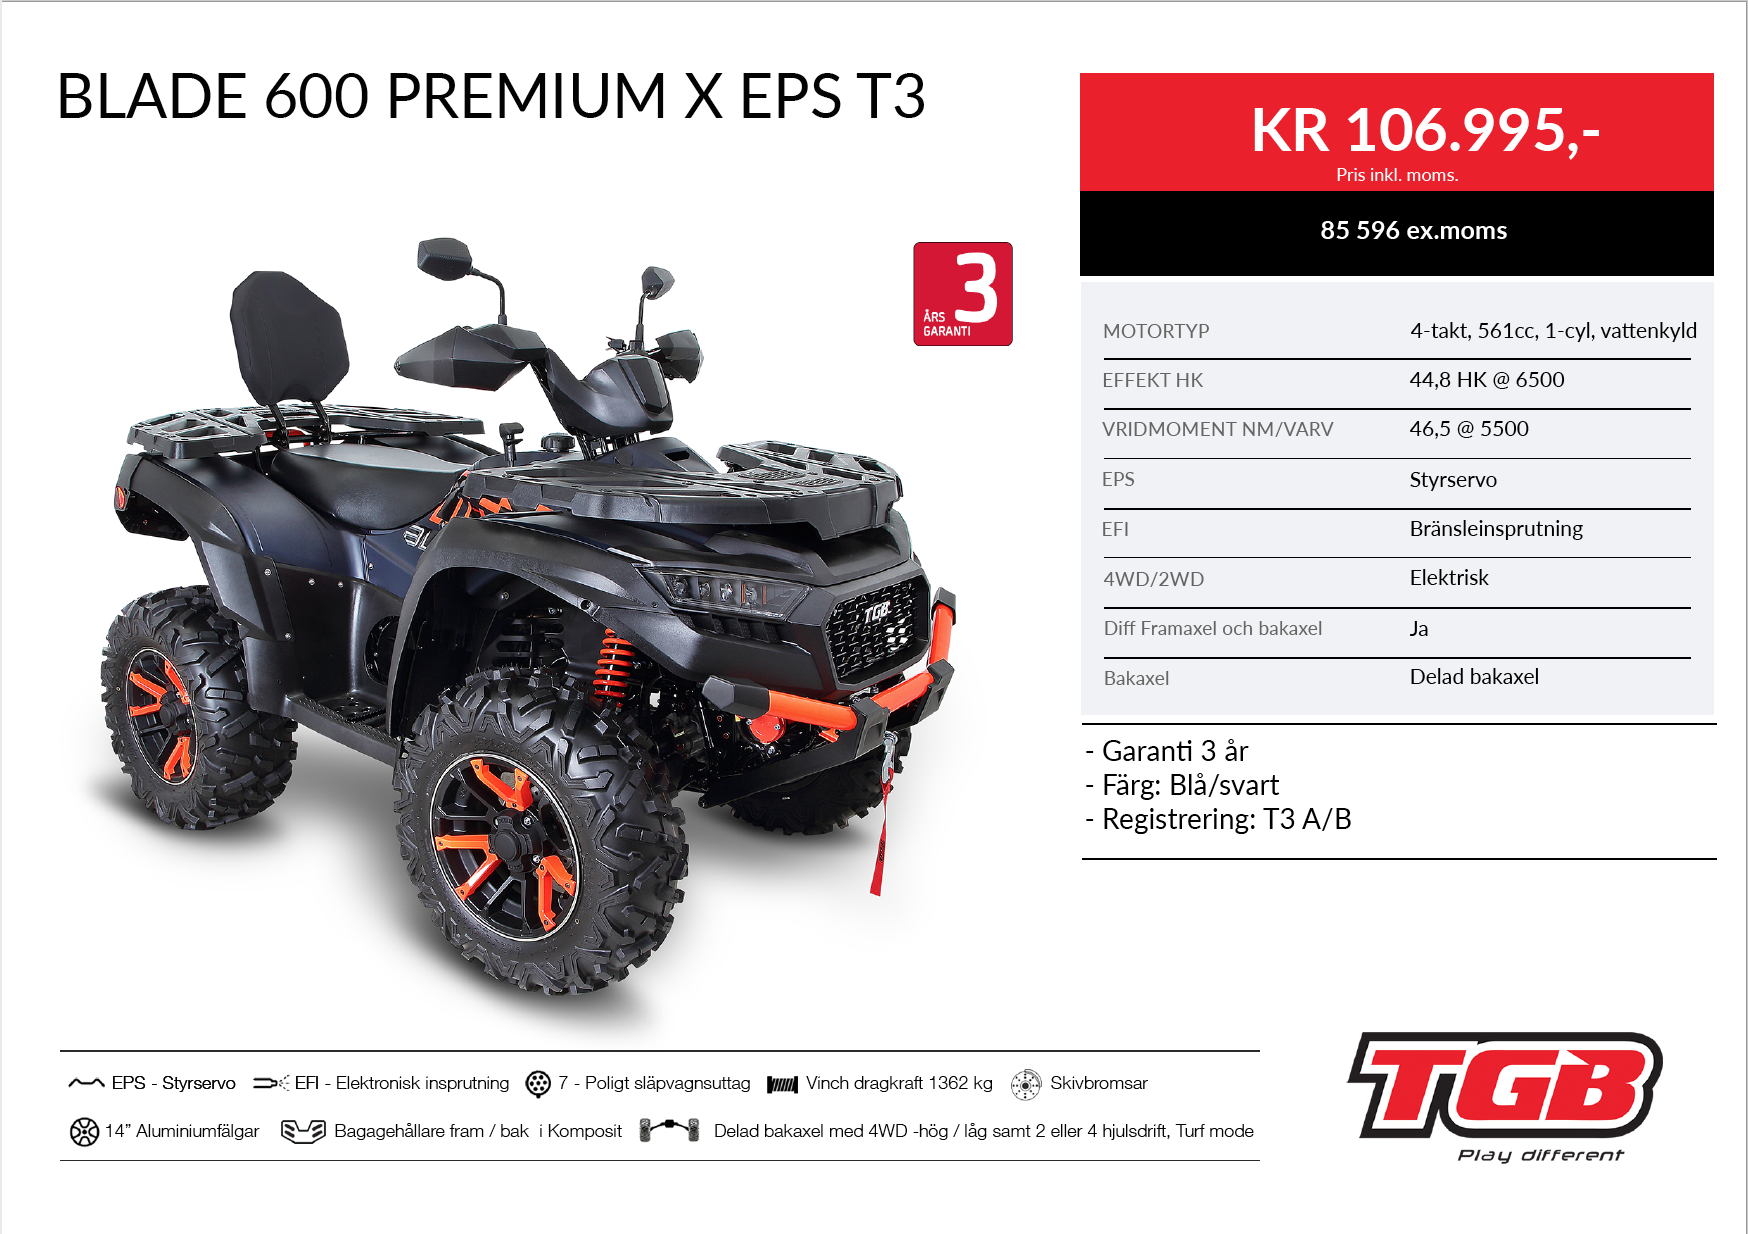 Blade 600 Premium X EPS T3